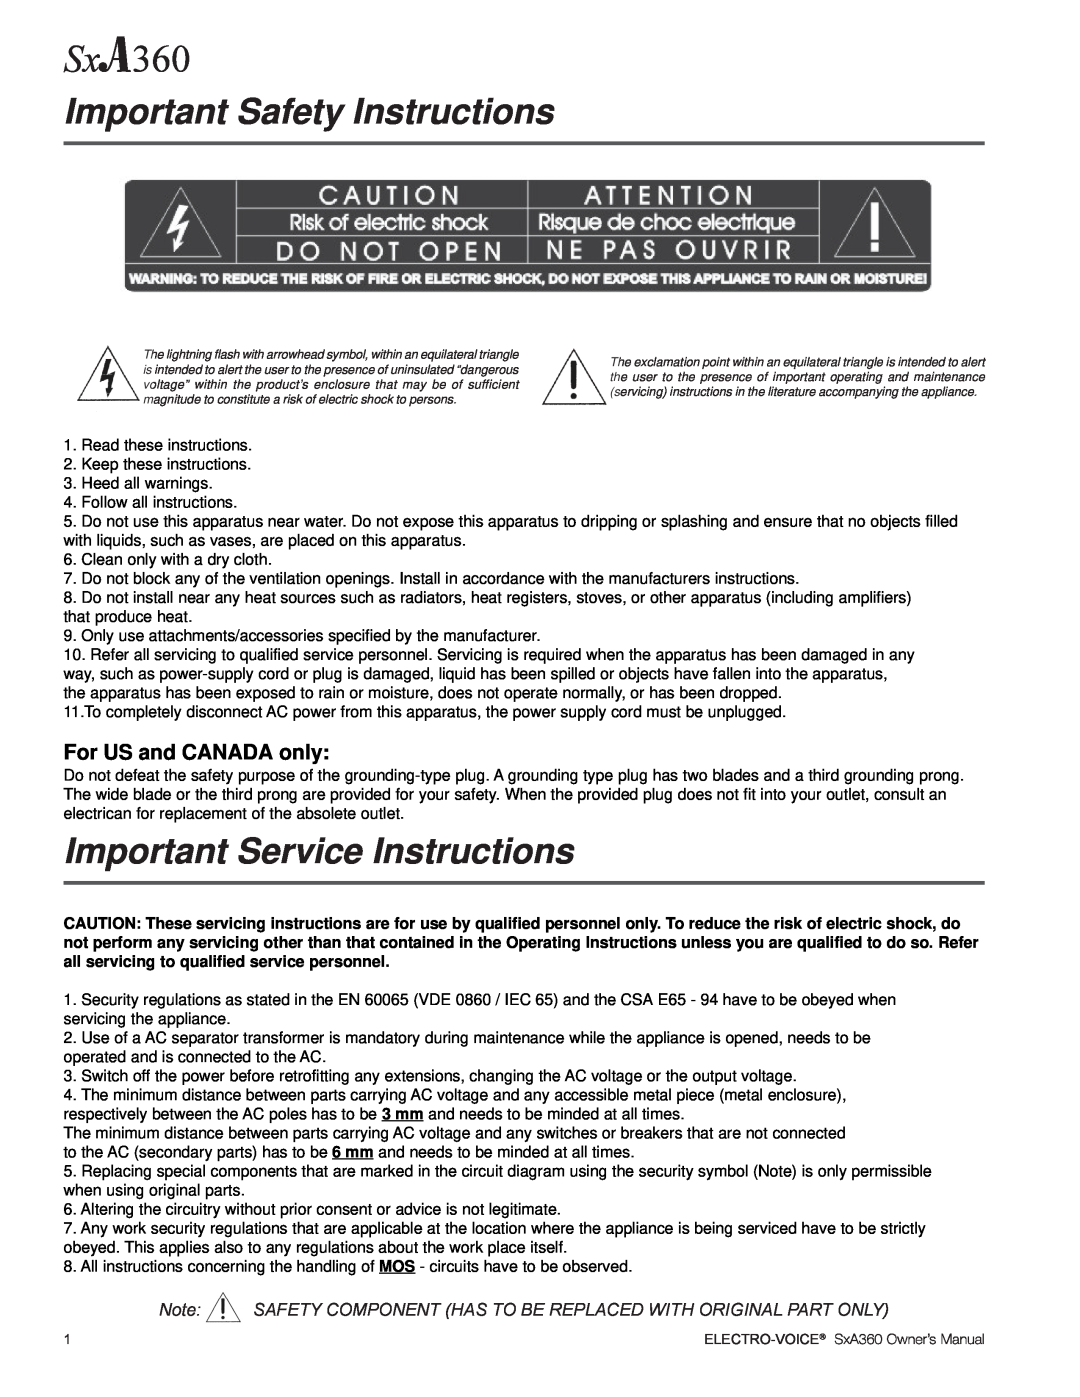 Electro-Voice SxA360 Important Safety Instructions, Important Service Instructions, For US and CANADA only, Electro-Voice 